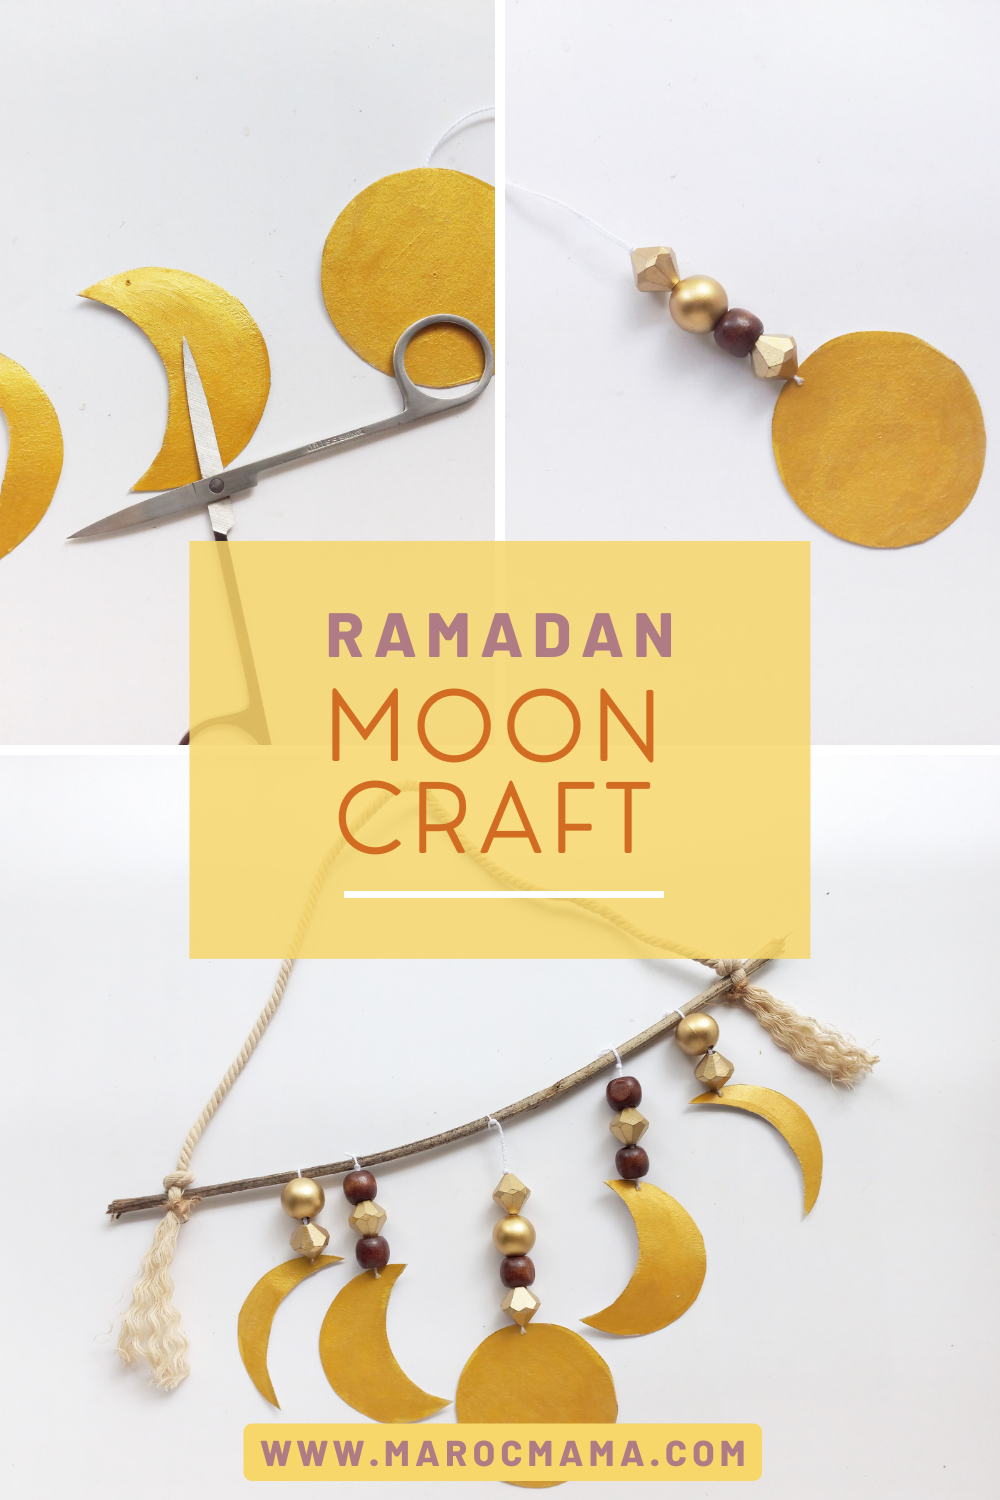 process of making Ramadan moon craft